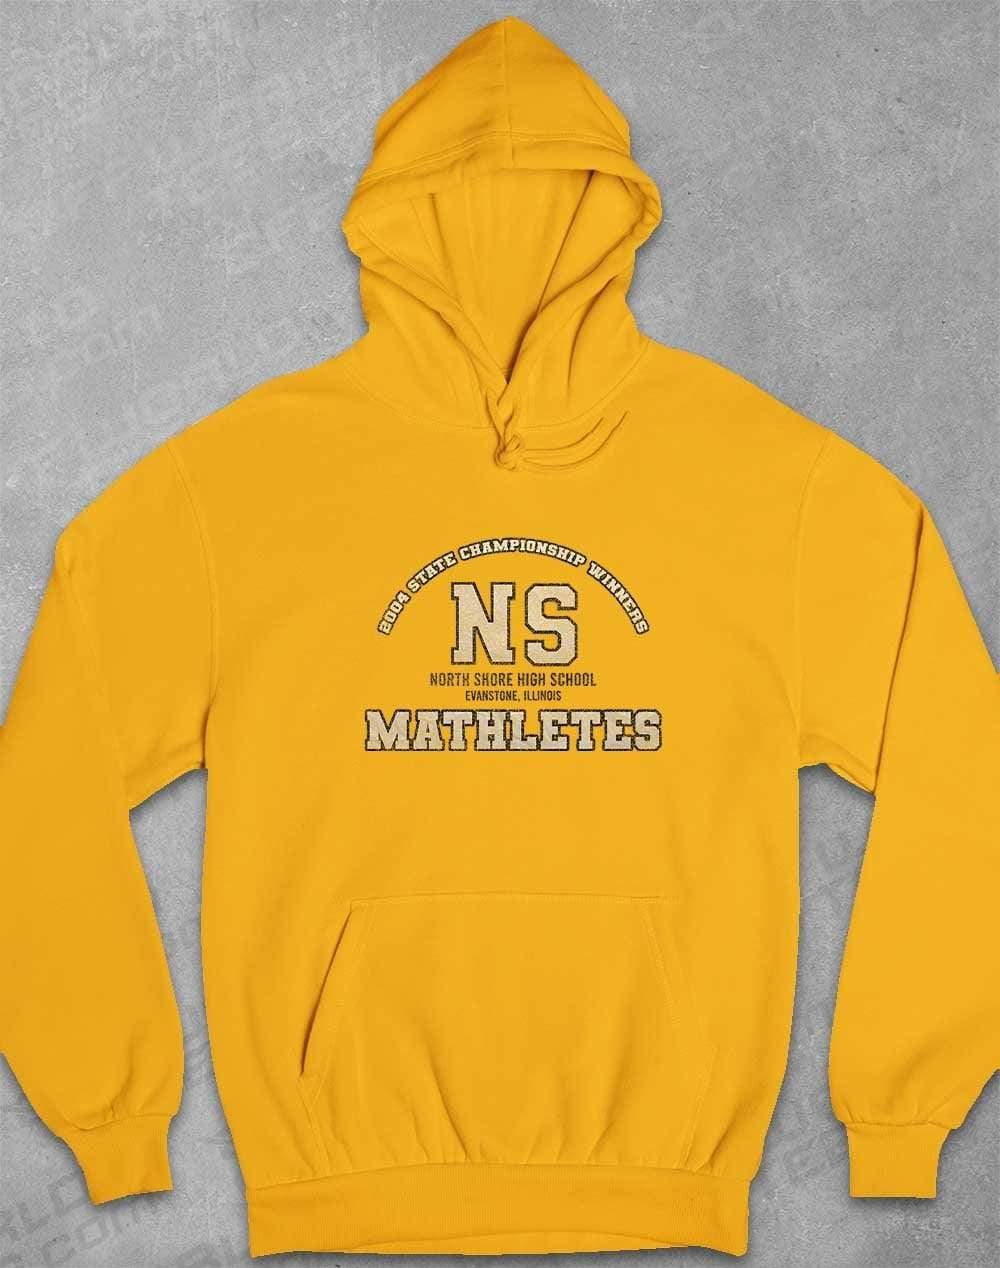 North Shore High School - Mathletes Hoodie XS / Gold  - Off World Tees